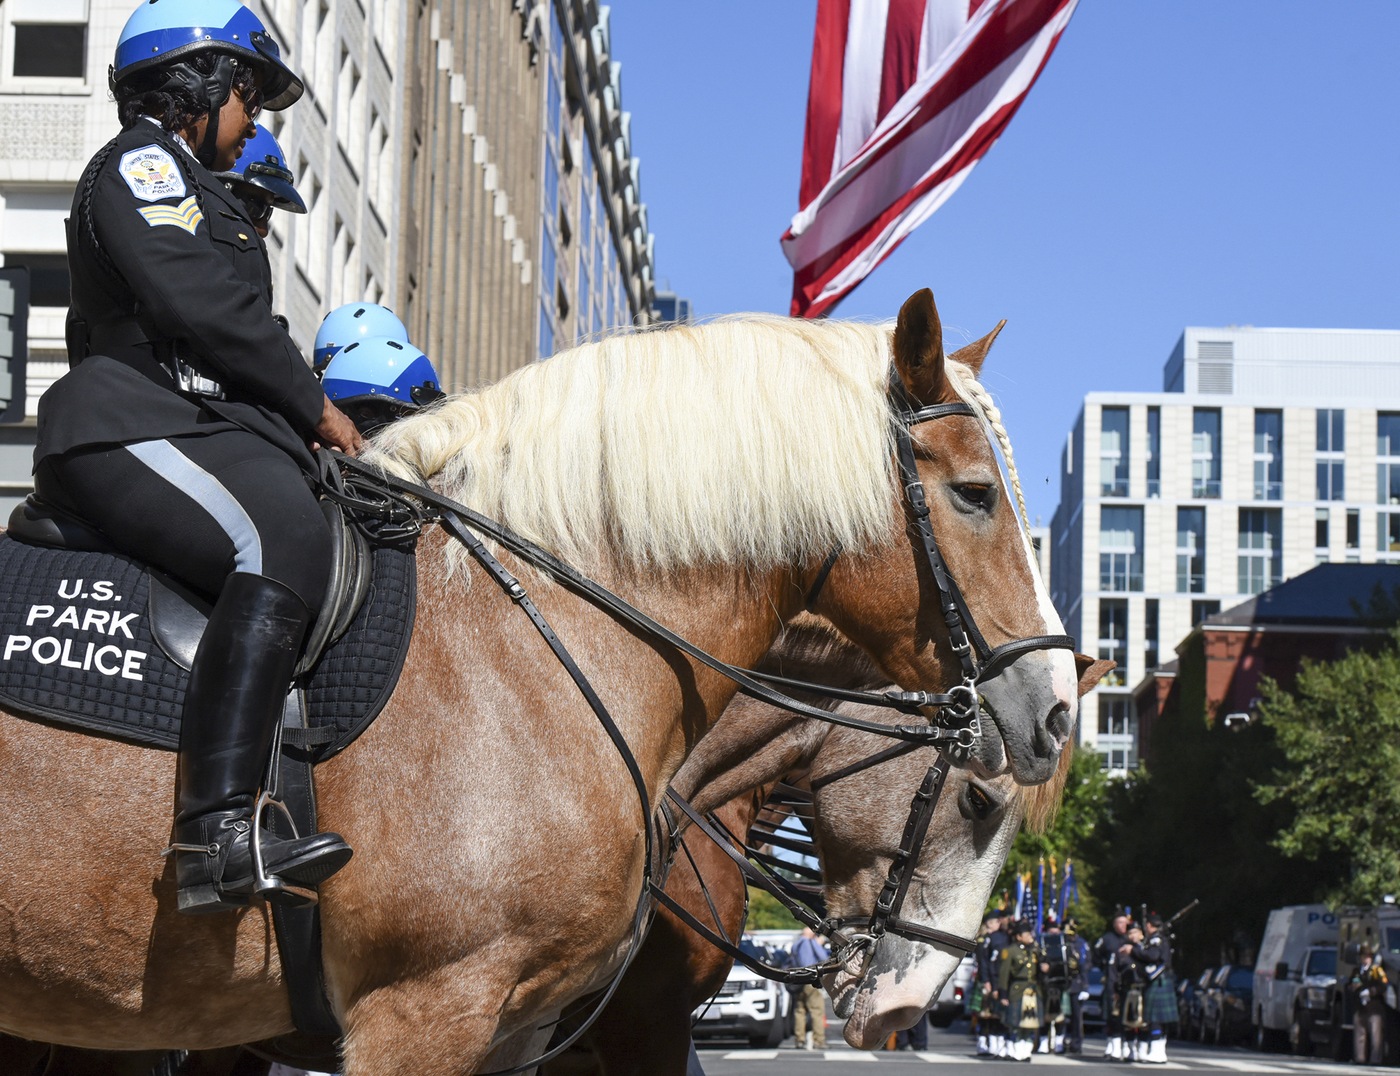 A U.S. Park Police officer on horseback outside of the Blue Mass on Sept. 29, 2021 in Washington, D.C.